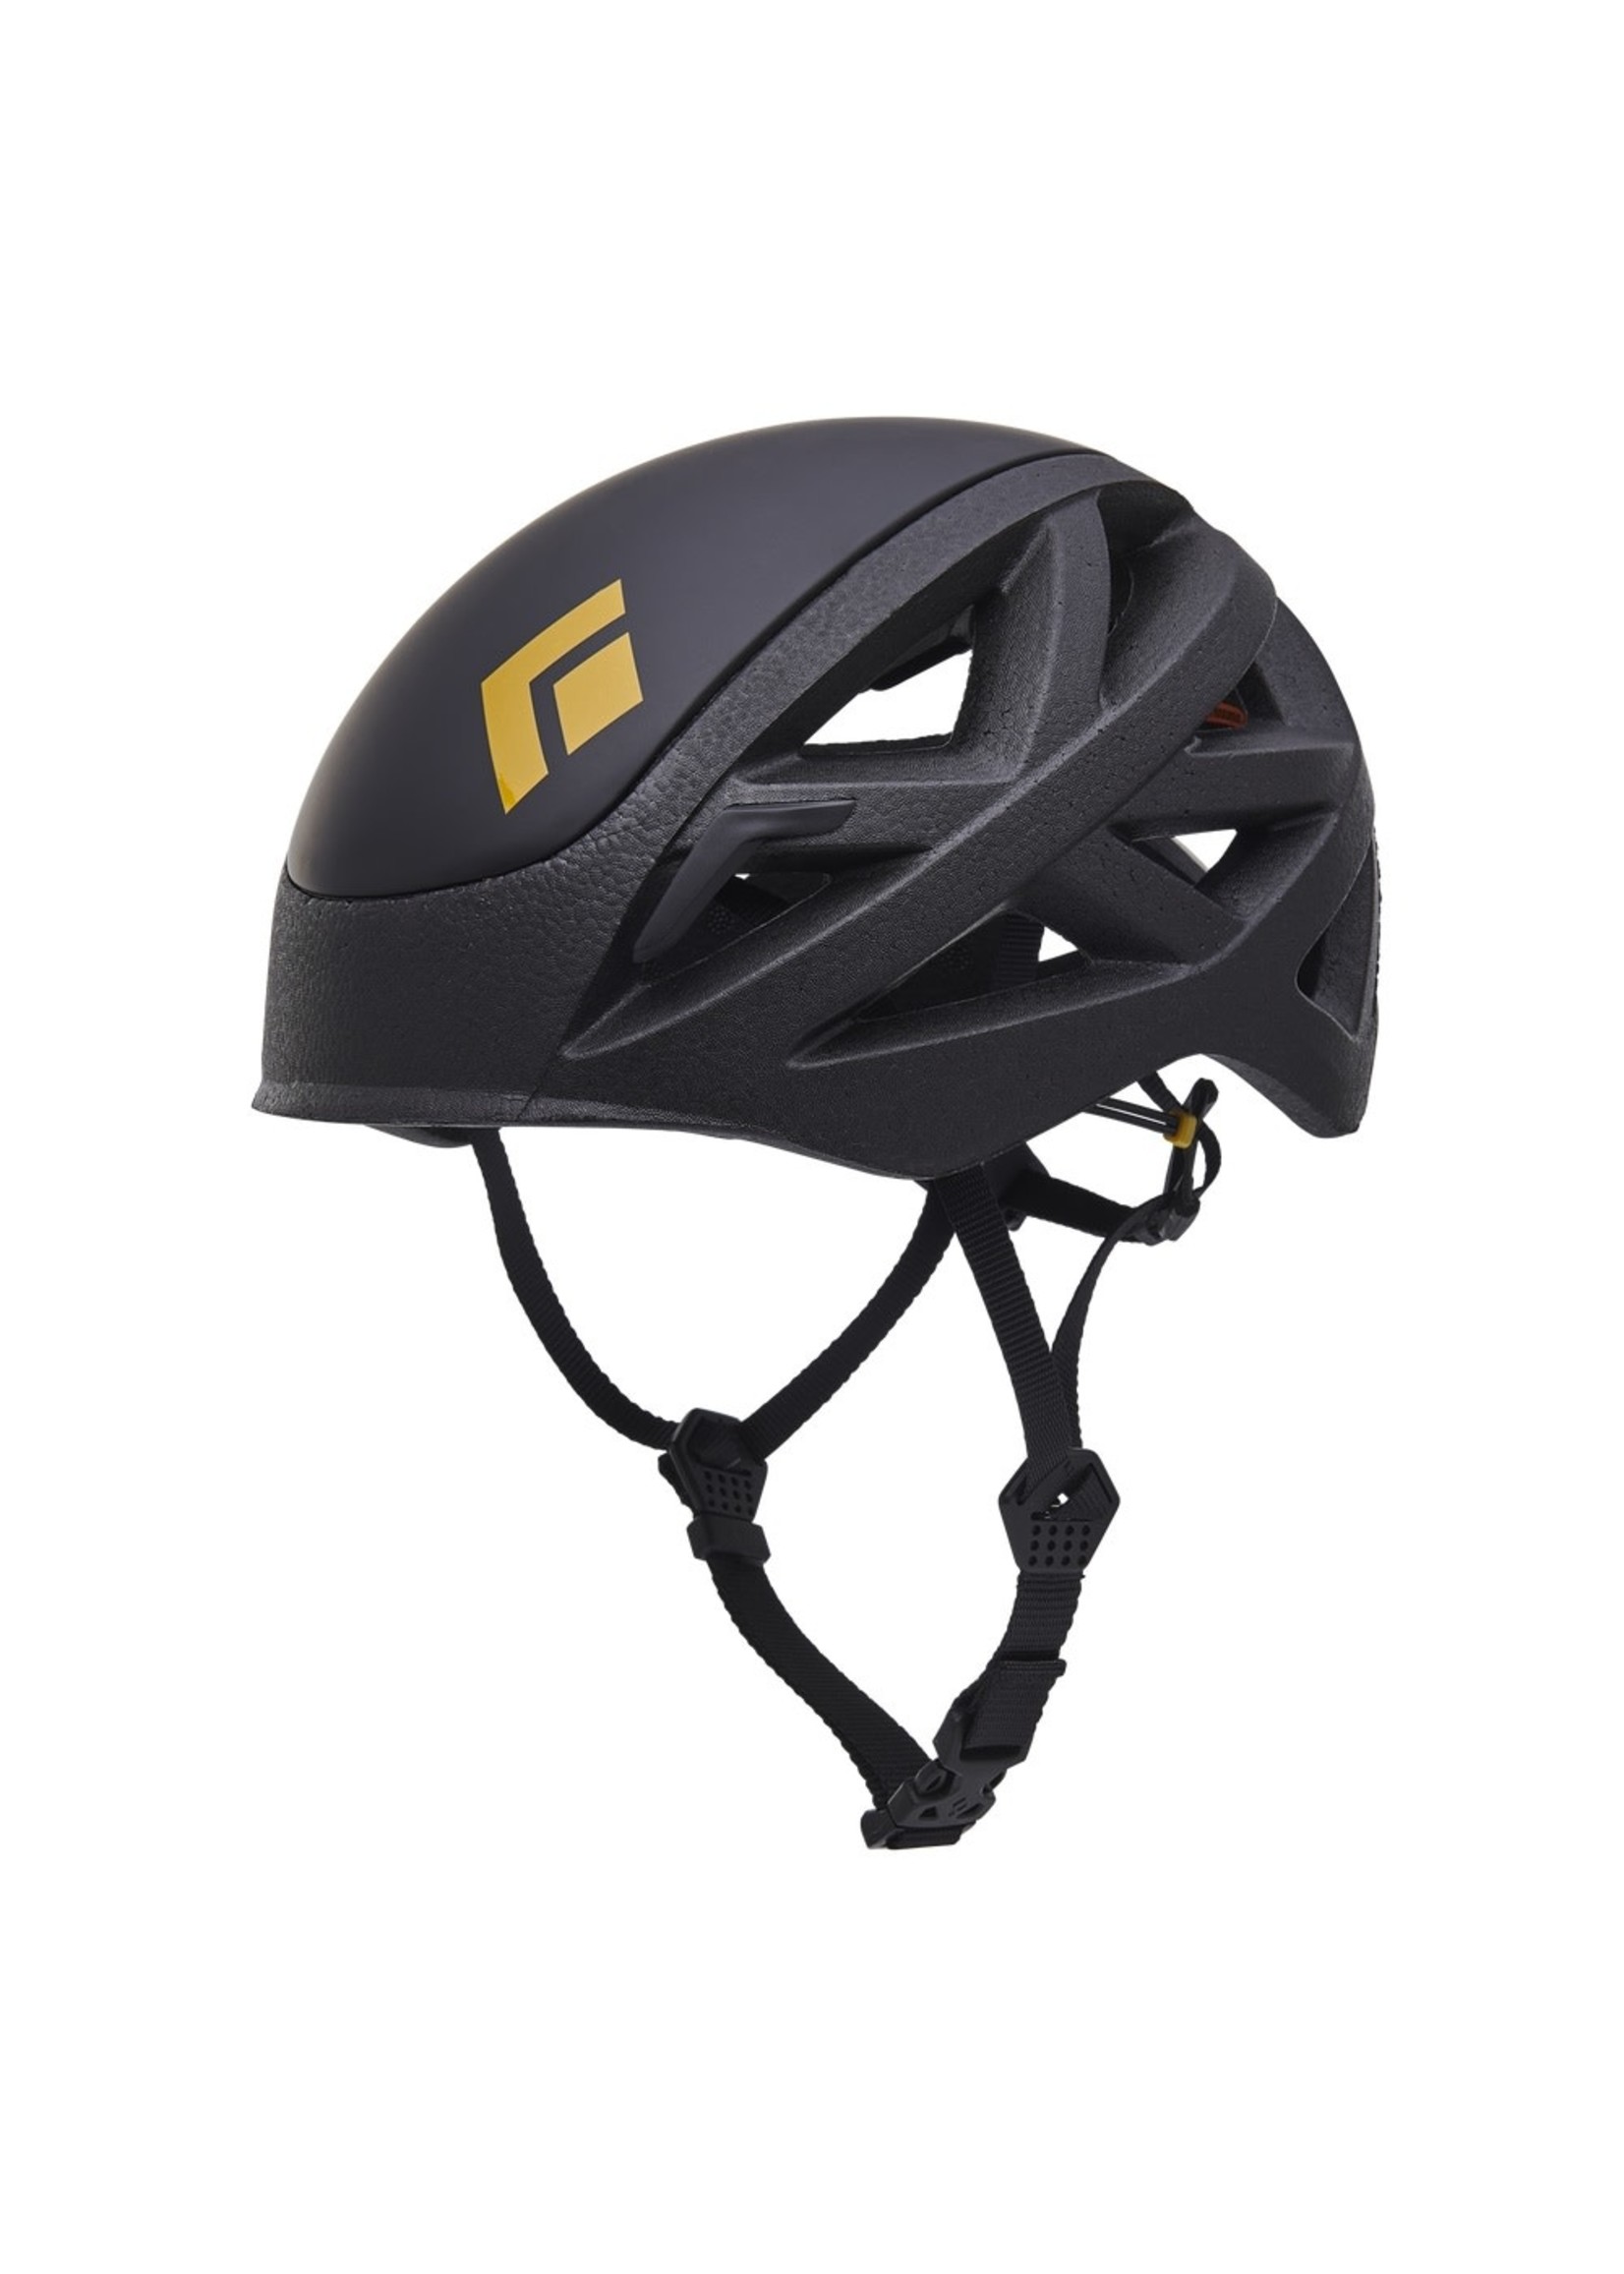 Black Diamond Black Diamond Vapor Helmet - New